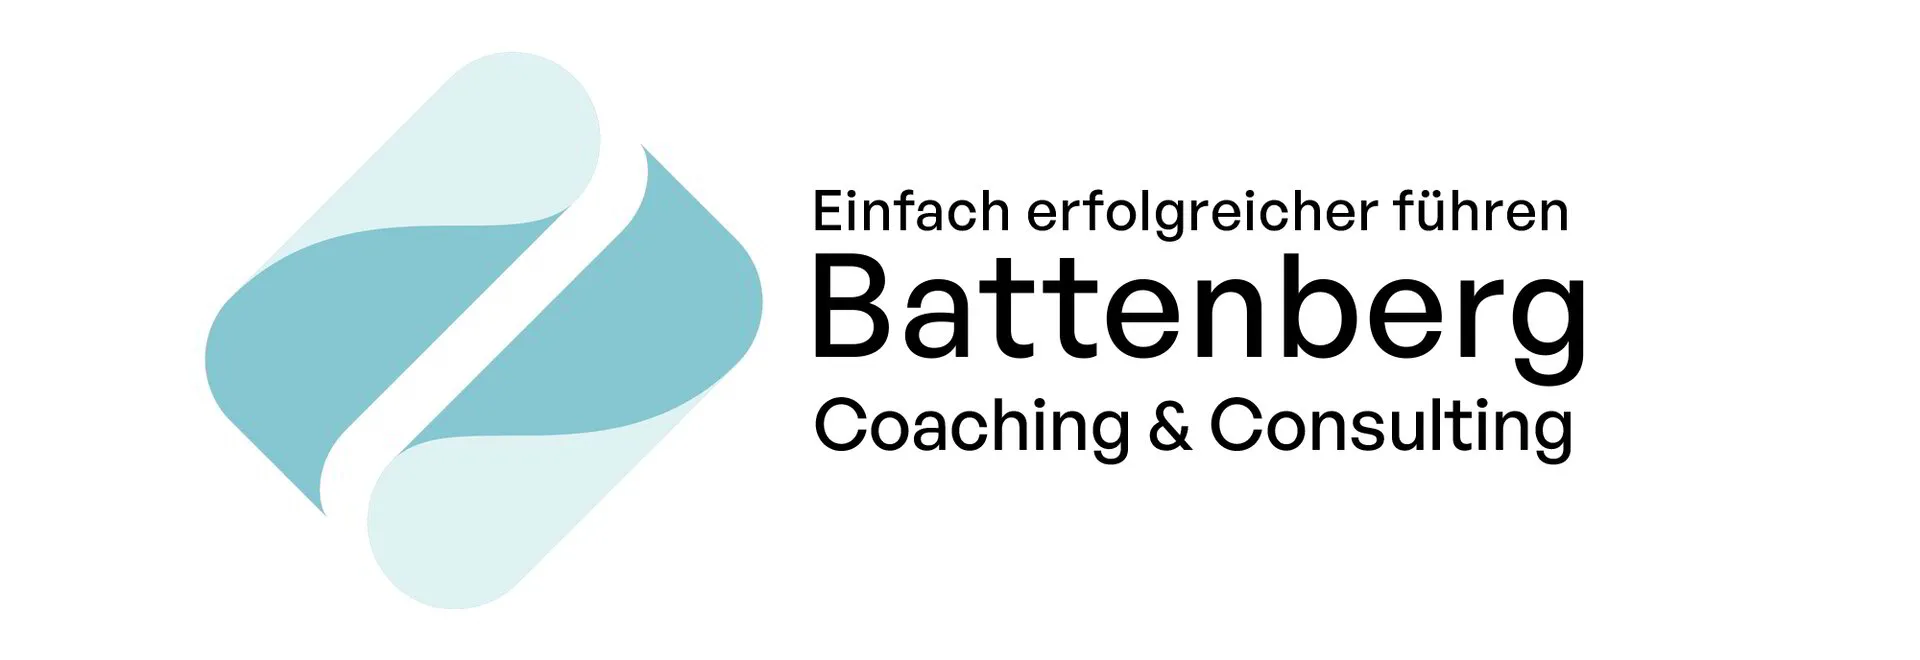 Battenberg Coaching und Consulting